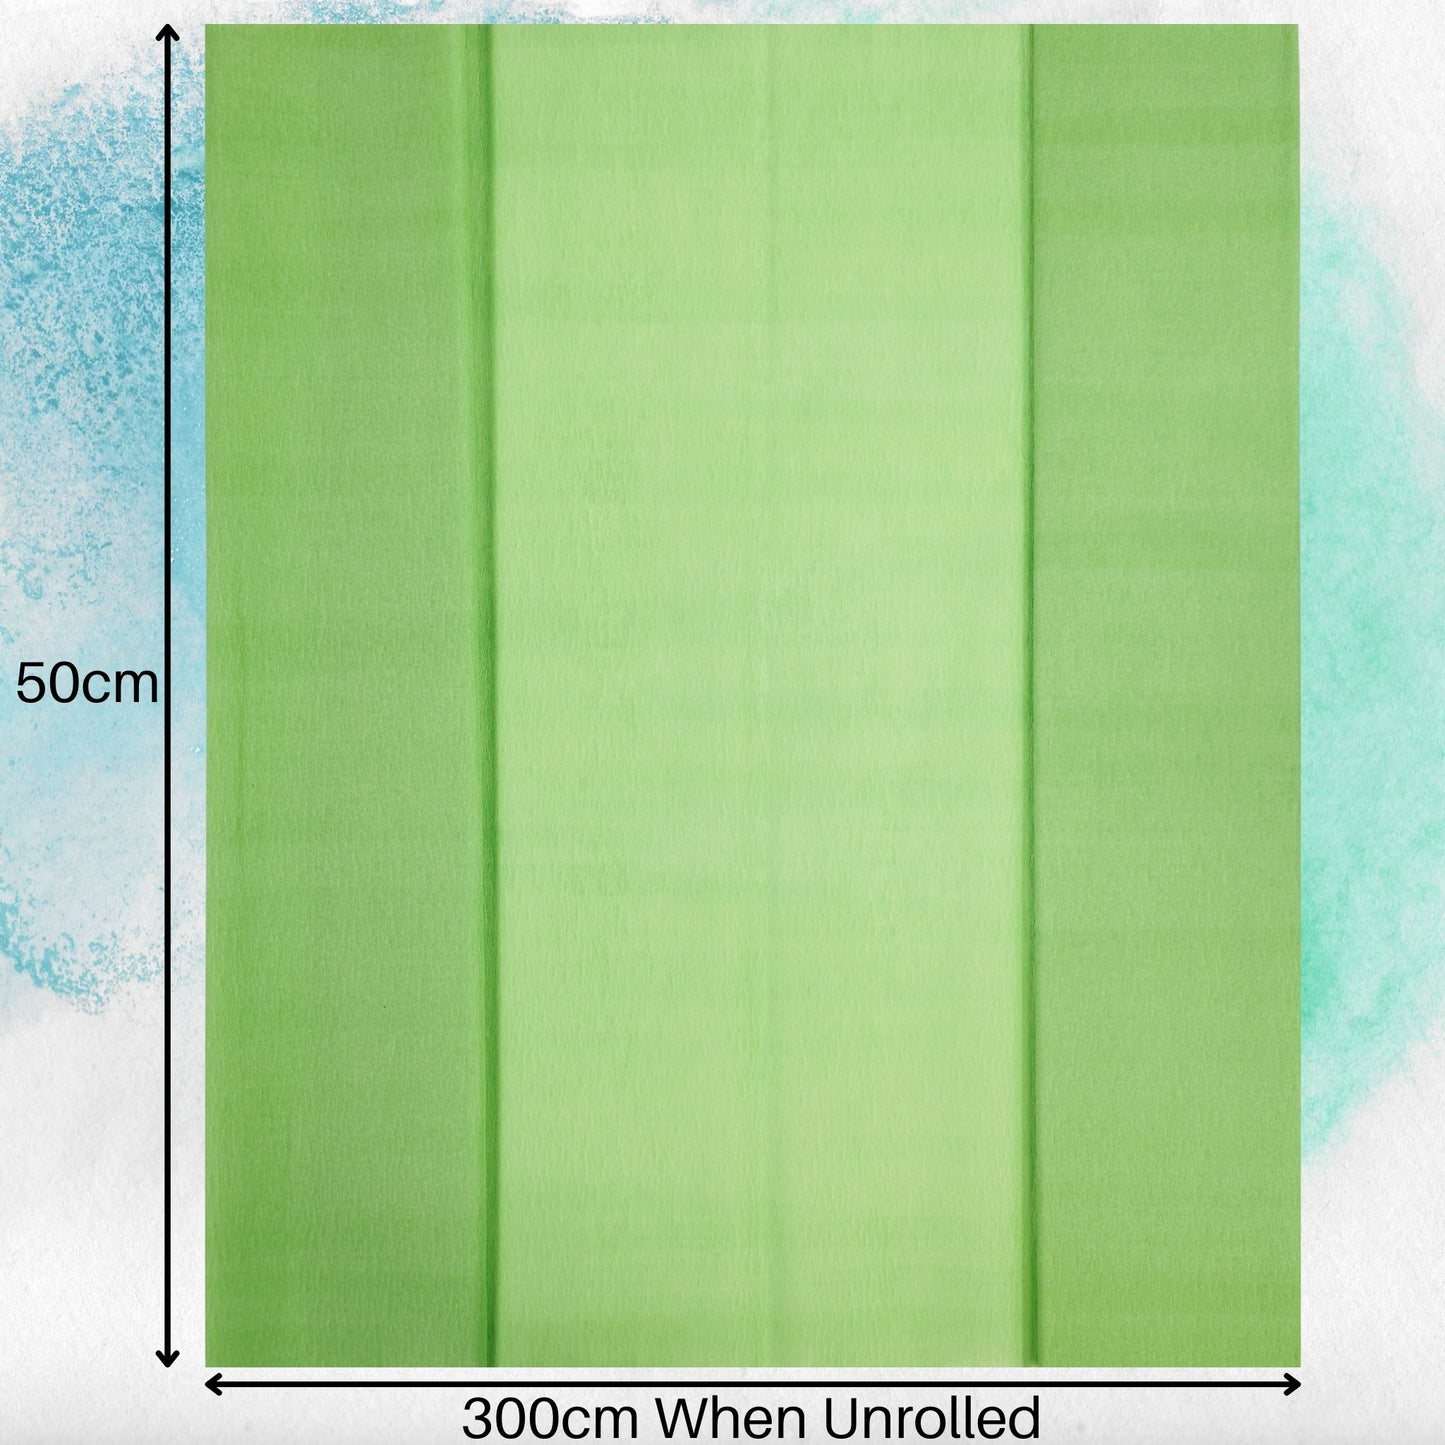 Crepe paper 3m 65% Stretch Light Green